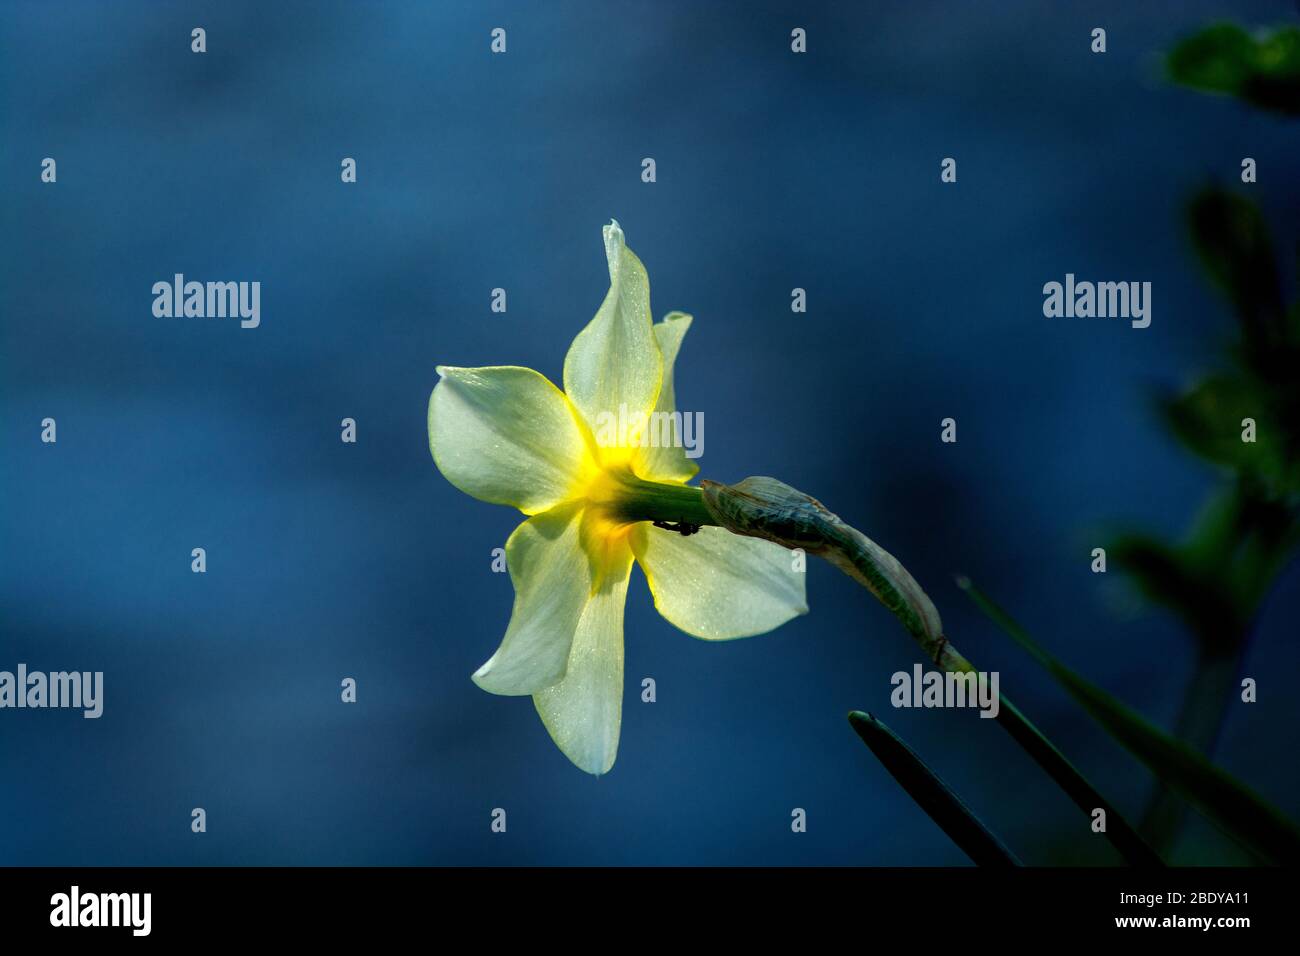 Concept flora : The Daffodil Stock Photo